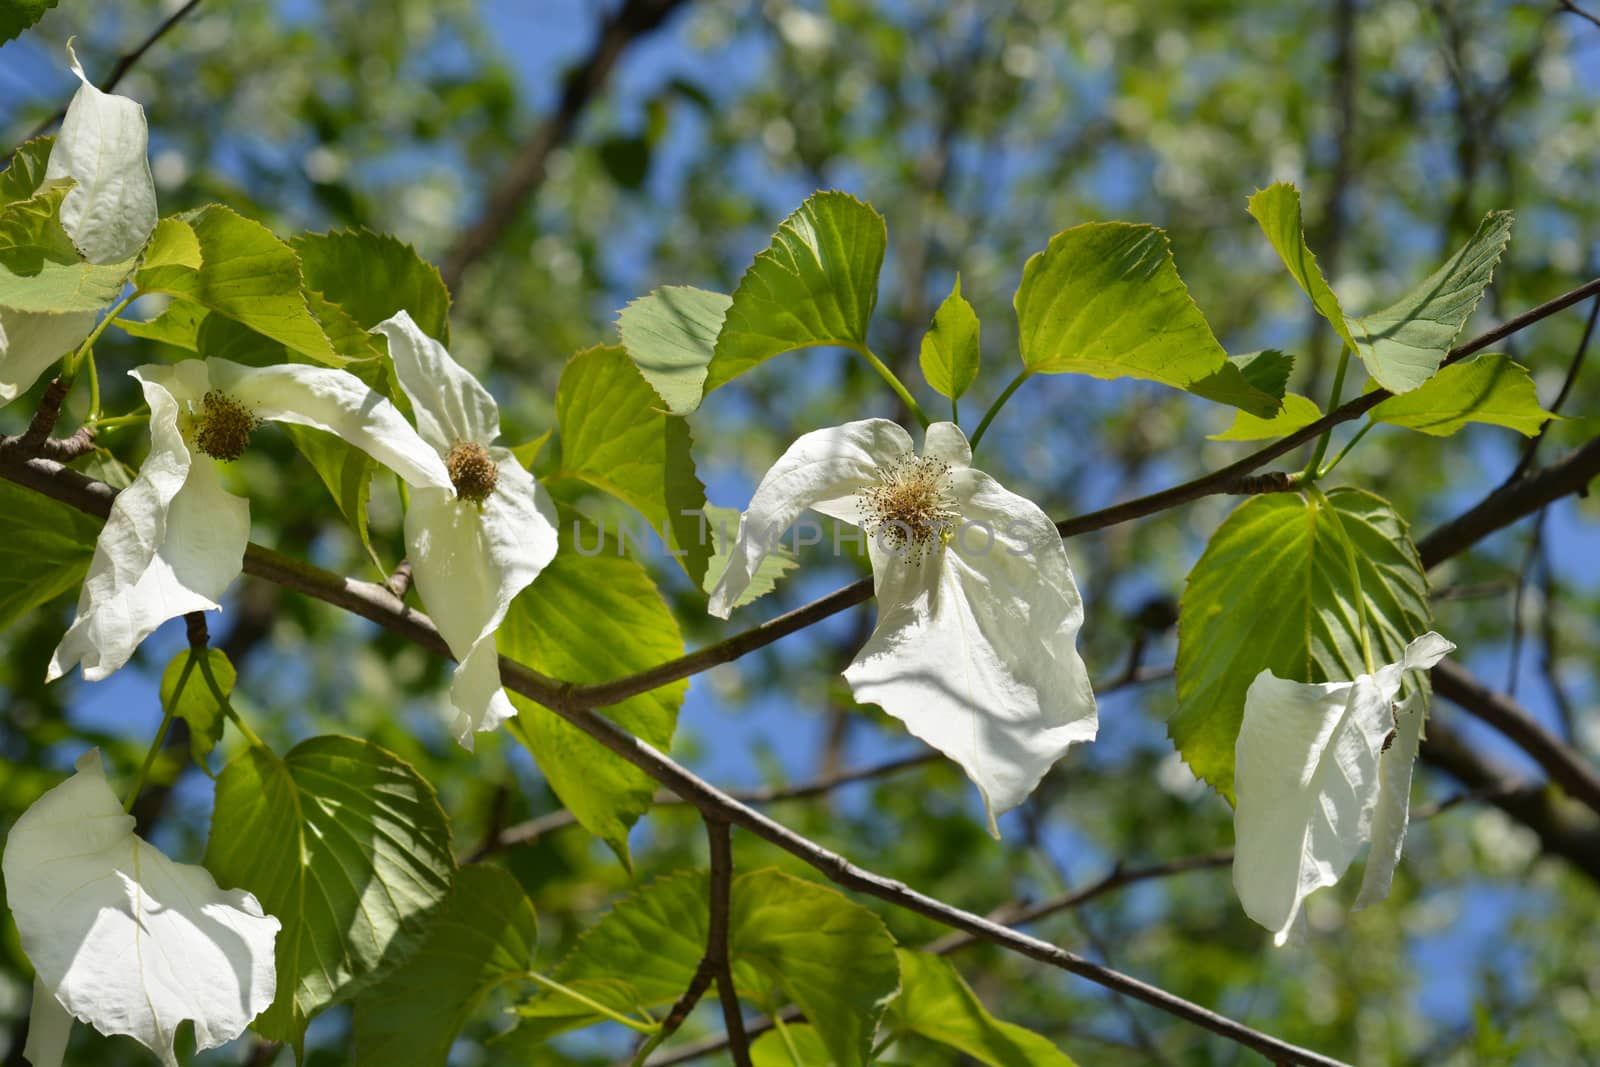 Handkerchief tree white flowers - Latin name - Davidia involucrata var. Vilmoriniana